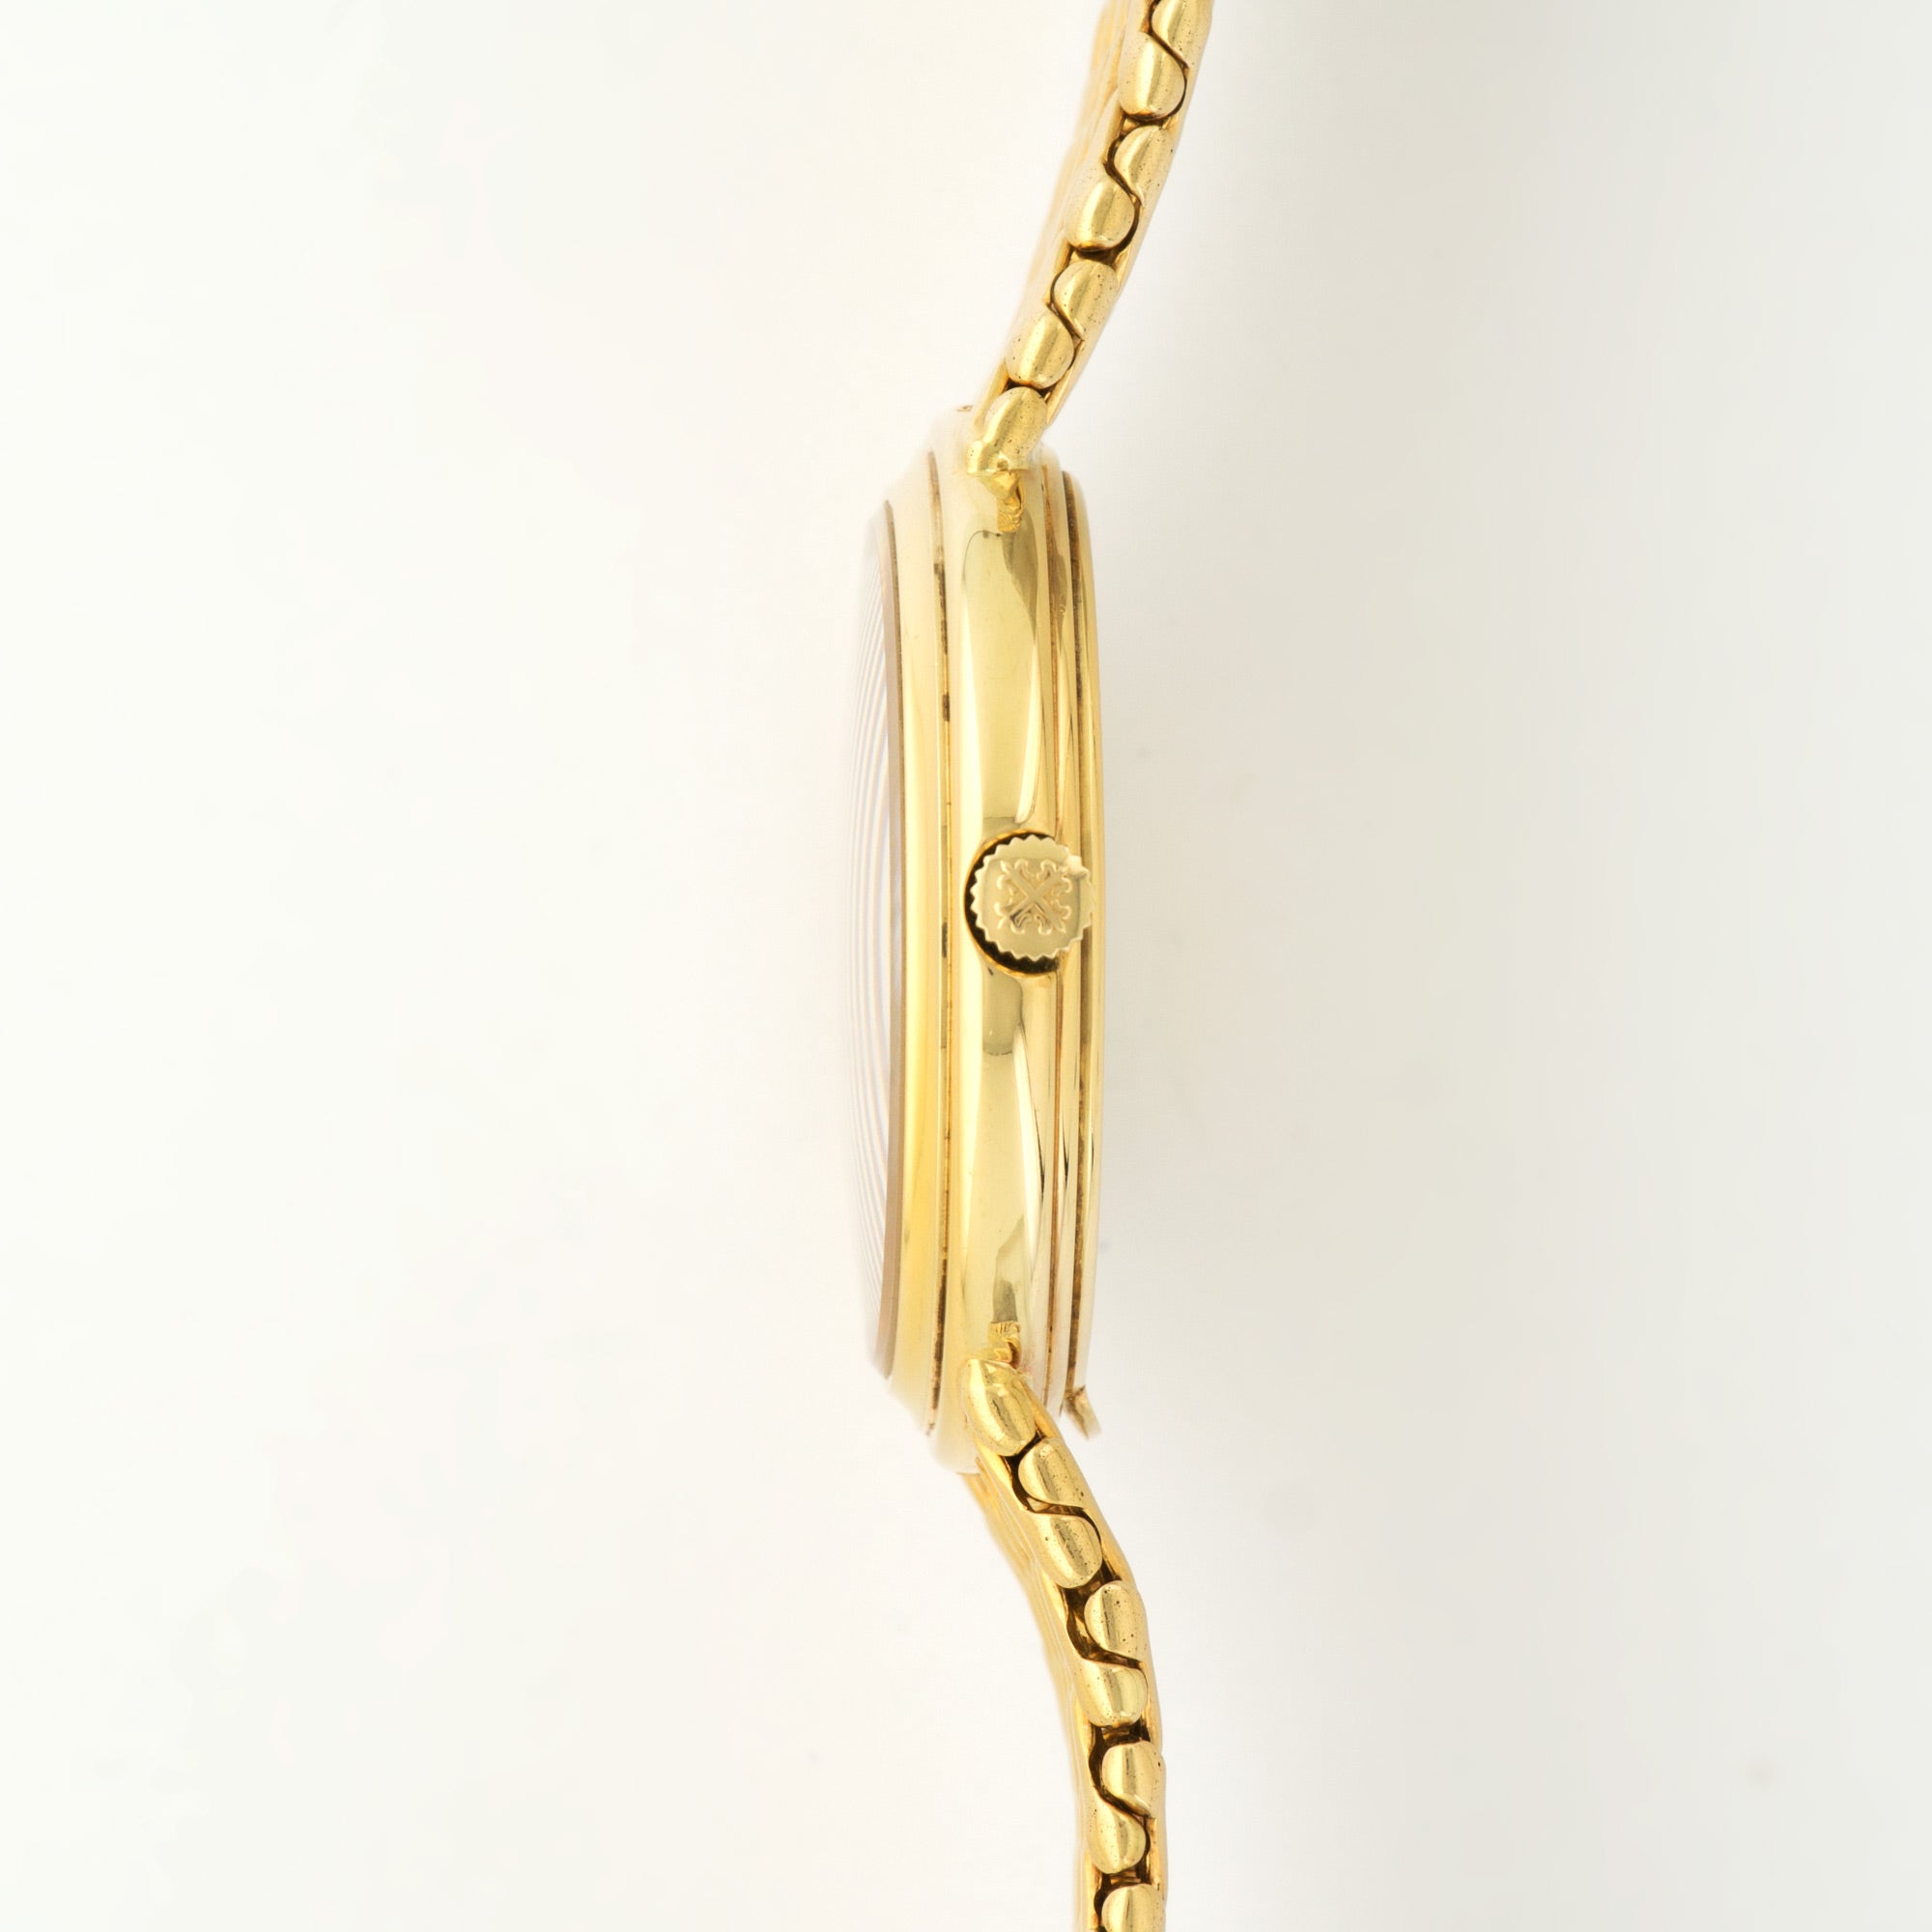 Patek Philippe - Patek Philippe Yellow Gold Perpetual Calendar Automatic Watch Ref. 3945 - The Keystone Watches